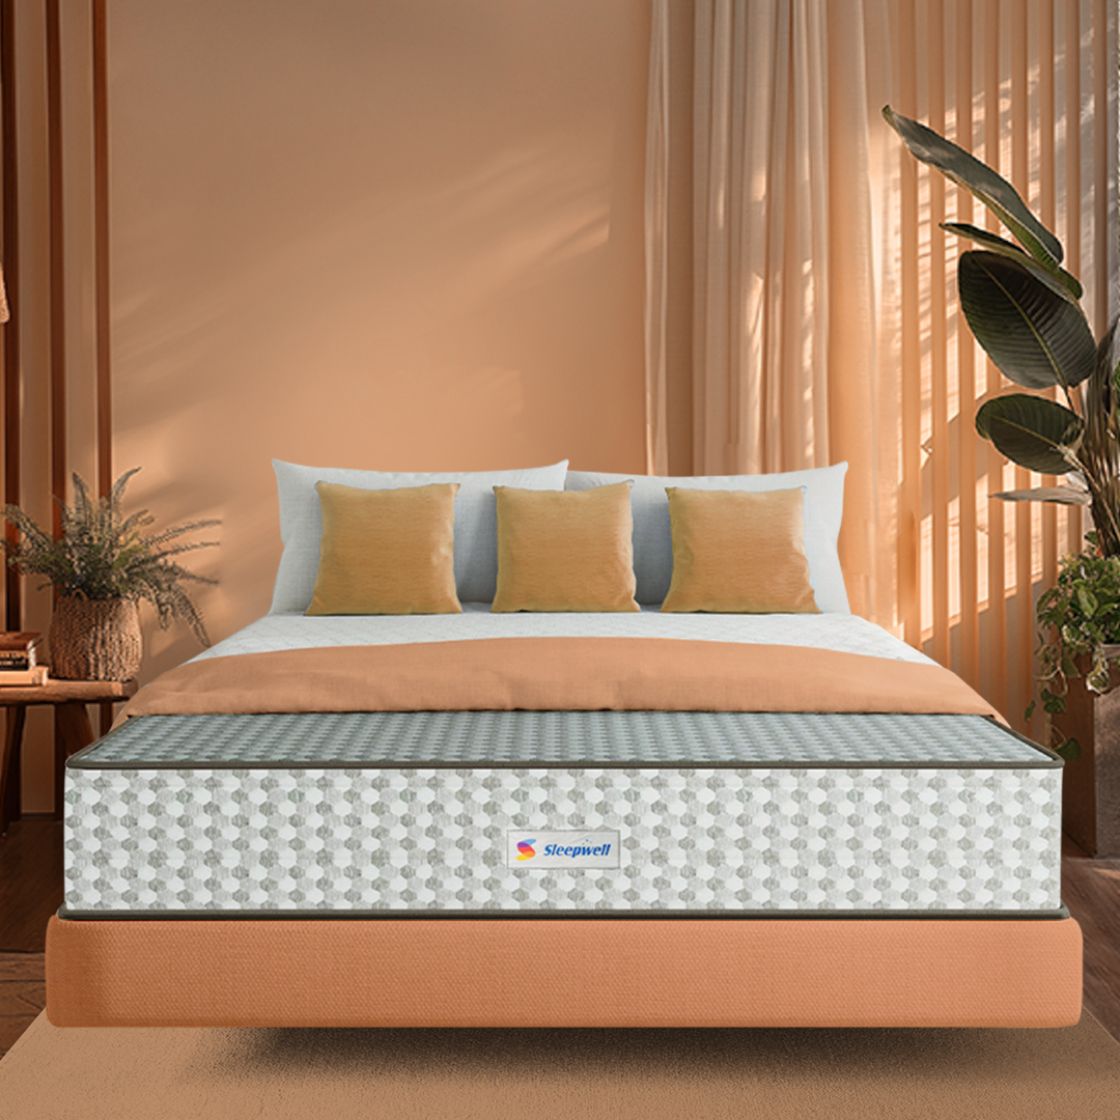 Sleepwell Dual PRO Profiled Foam Reversible 5-inch King Bed Size, Gentle and Firm, Triple Layered Anti Sag Foam Mattress (Grey, 78x72x5)